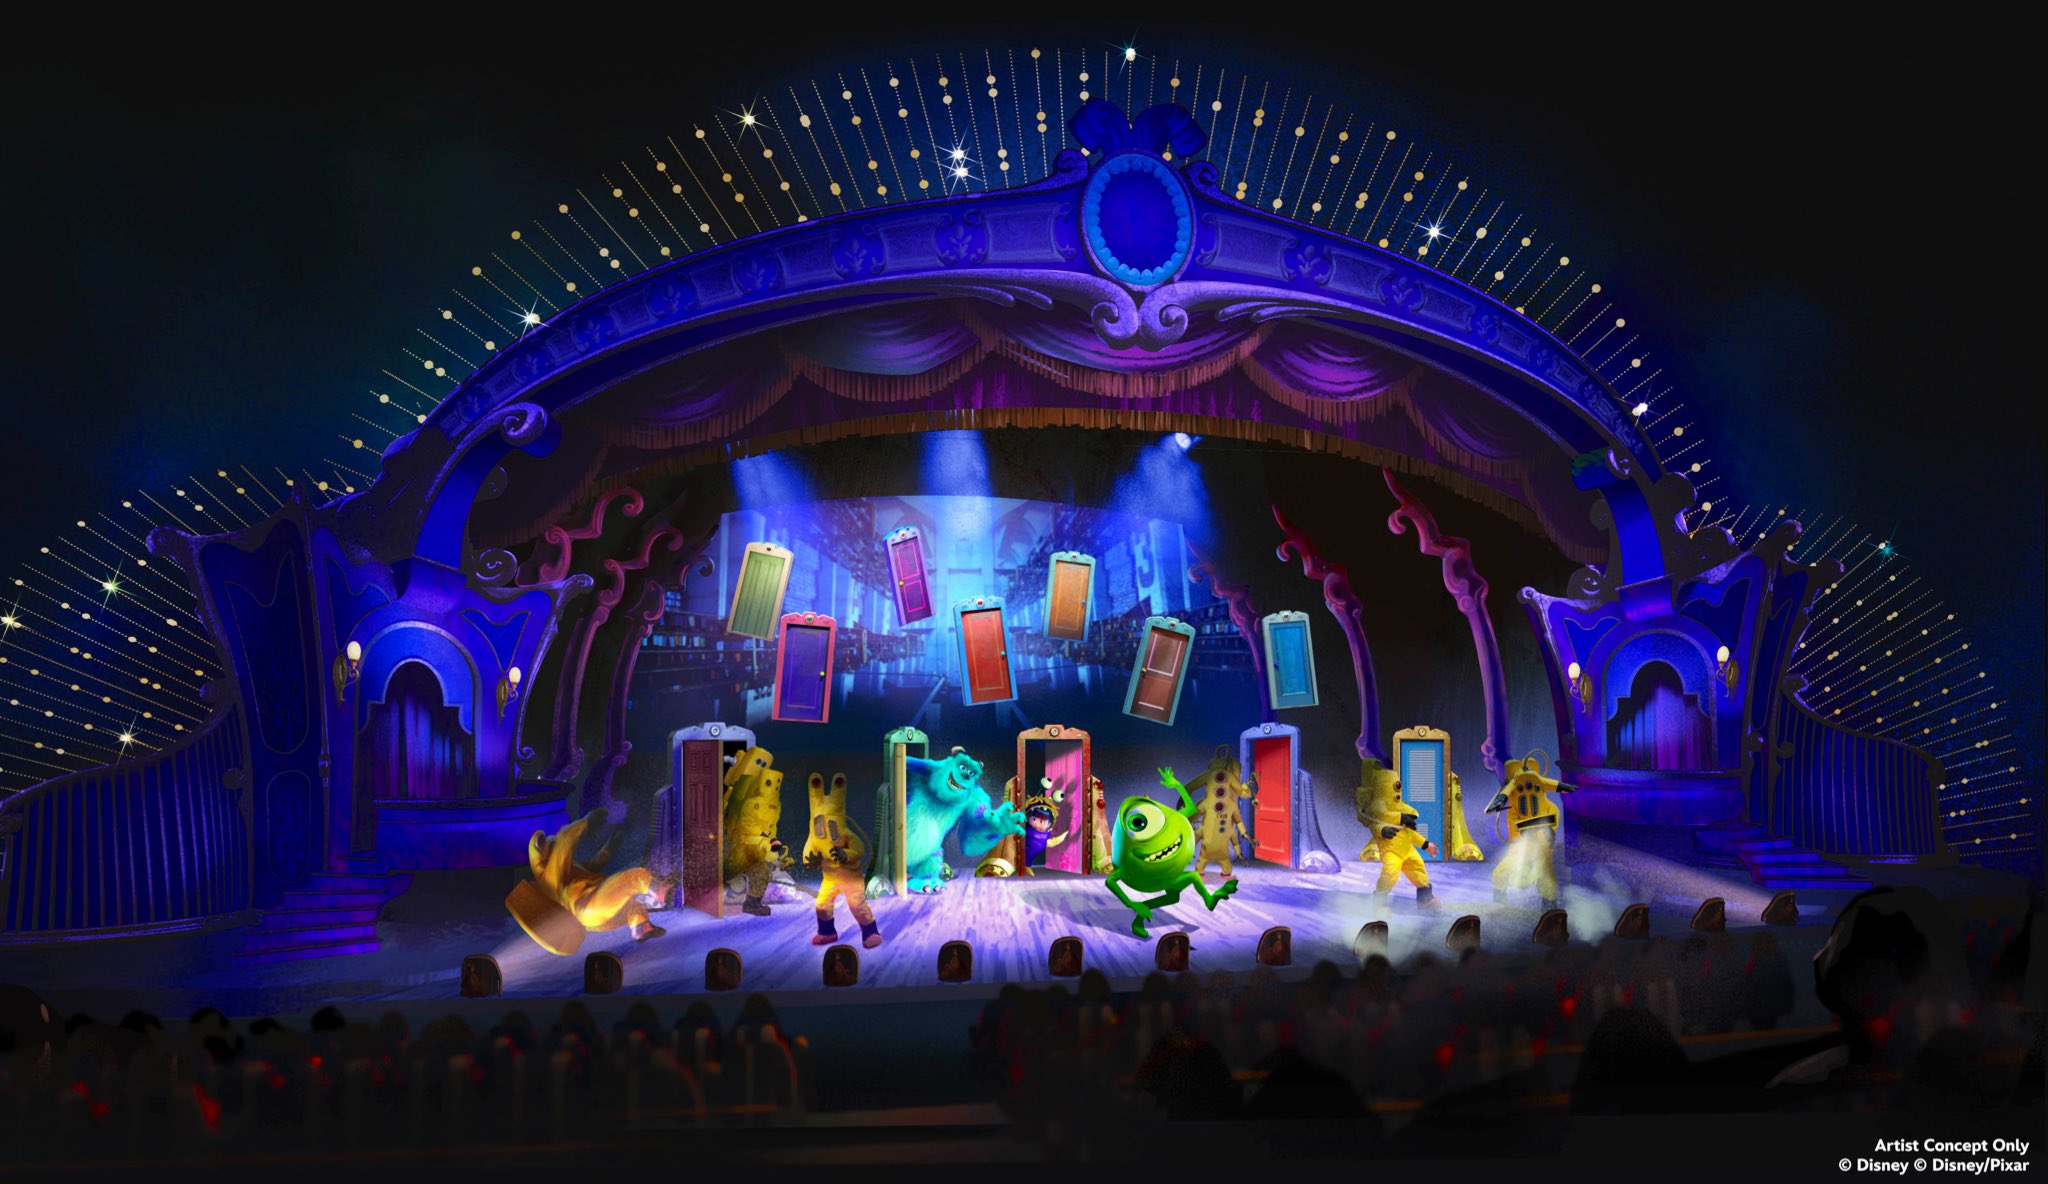 Behind the scenes at the new Disneyland Paris Show, Pixar: A Musical Adventure